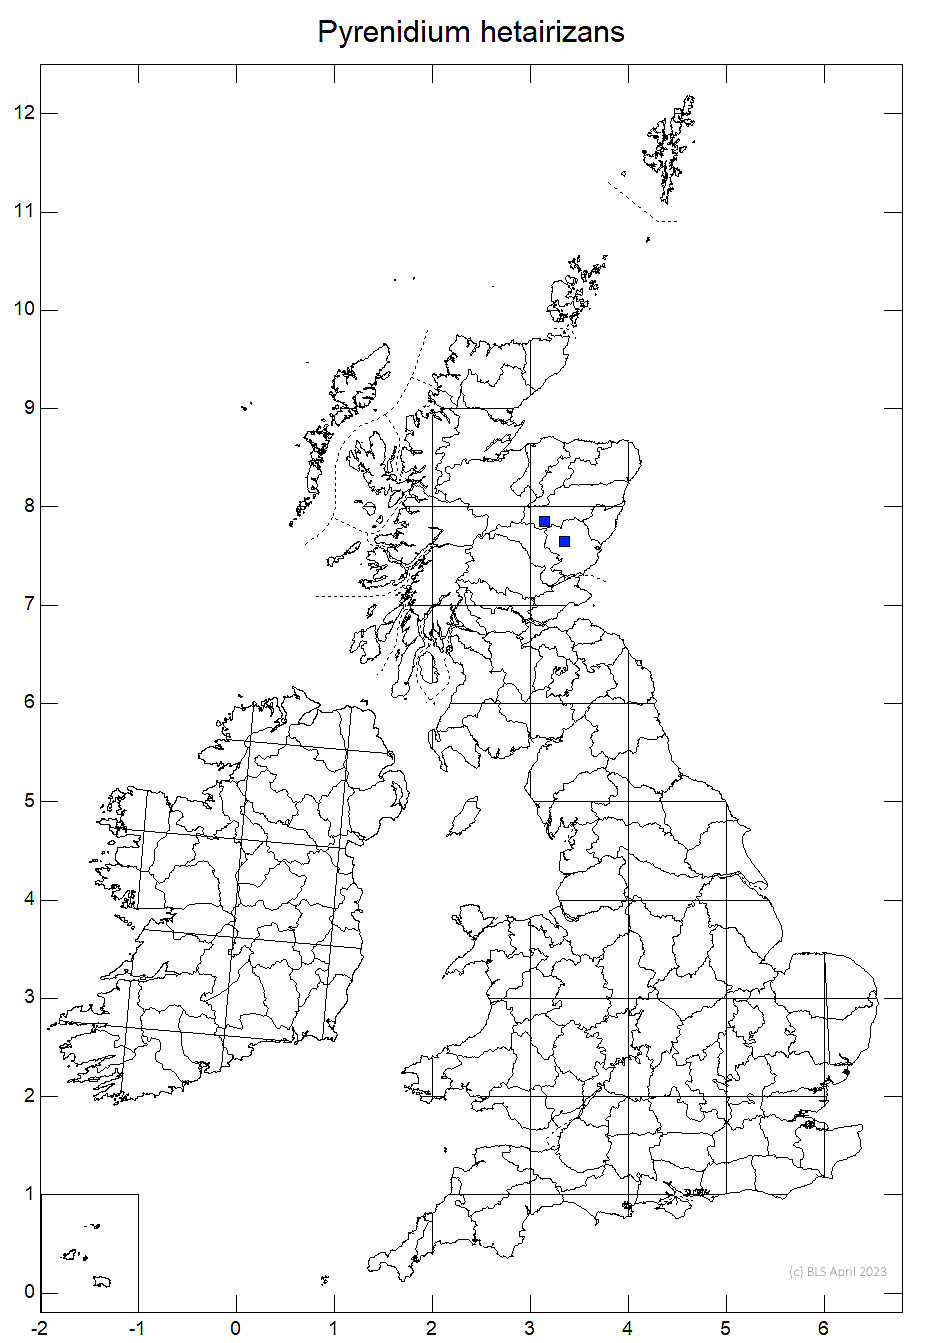 Pyrenidium hetairizans 10km sq distribution map